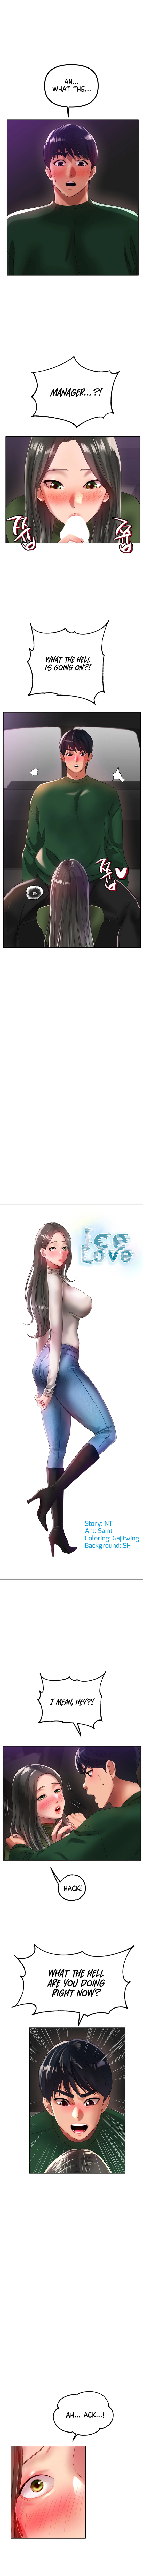 Ice Love image